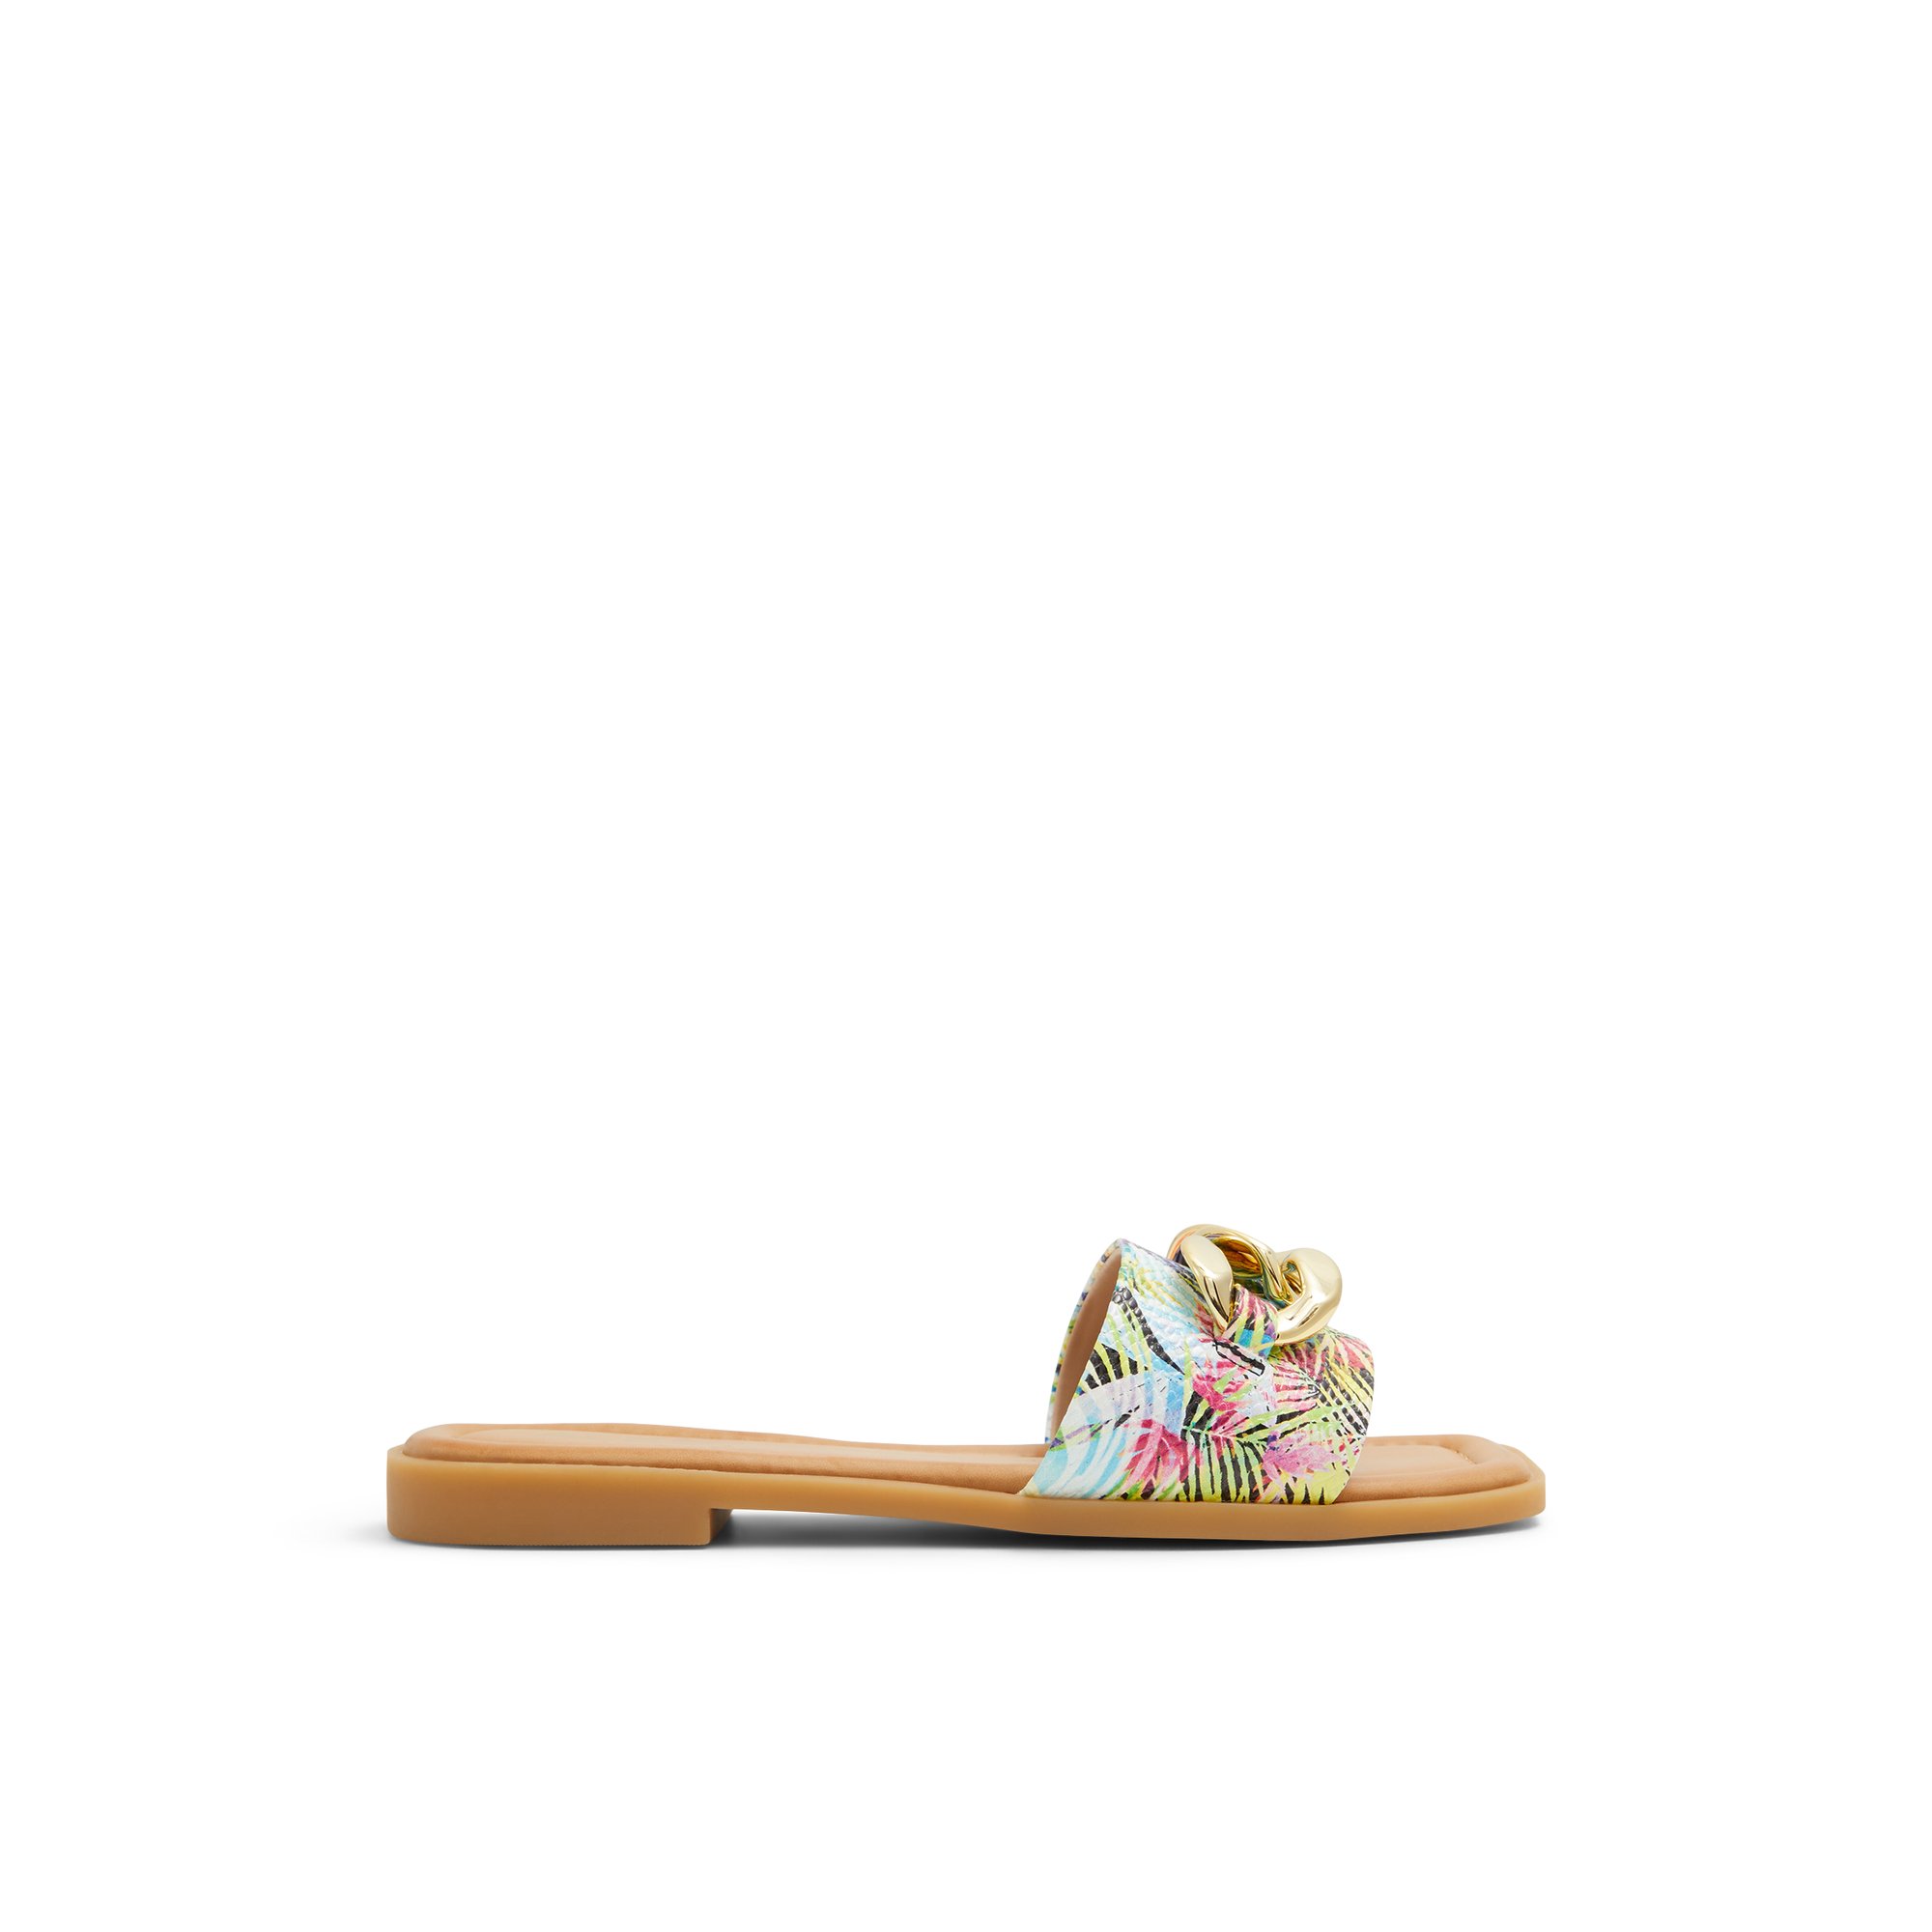 ALDO Ezie - Women's Flat Sandals - Bright